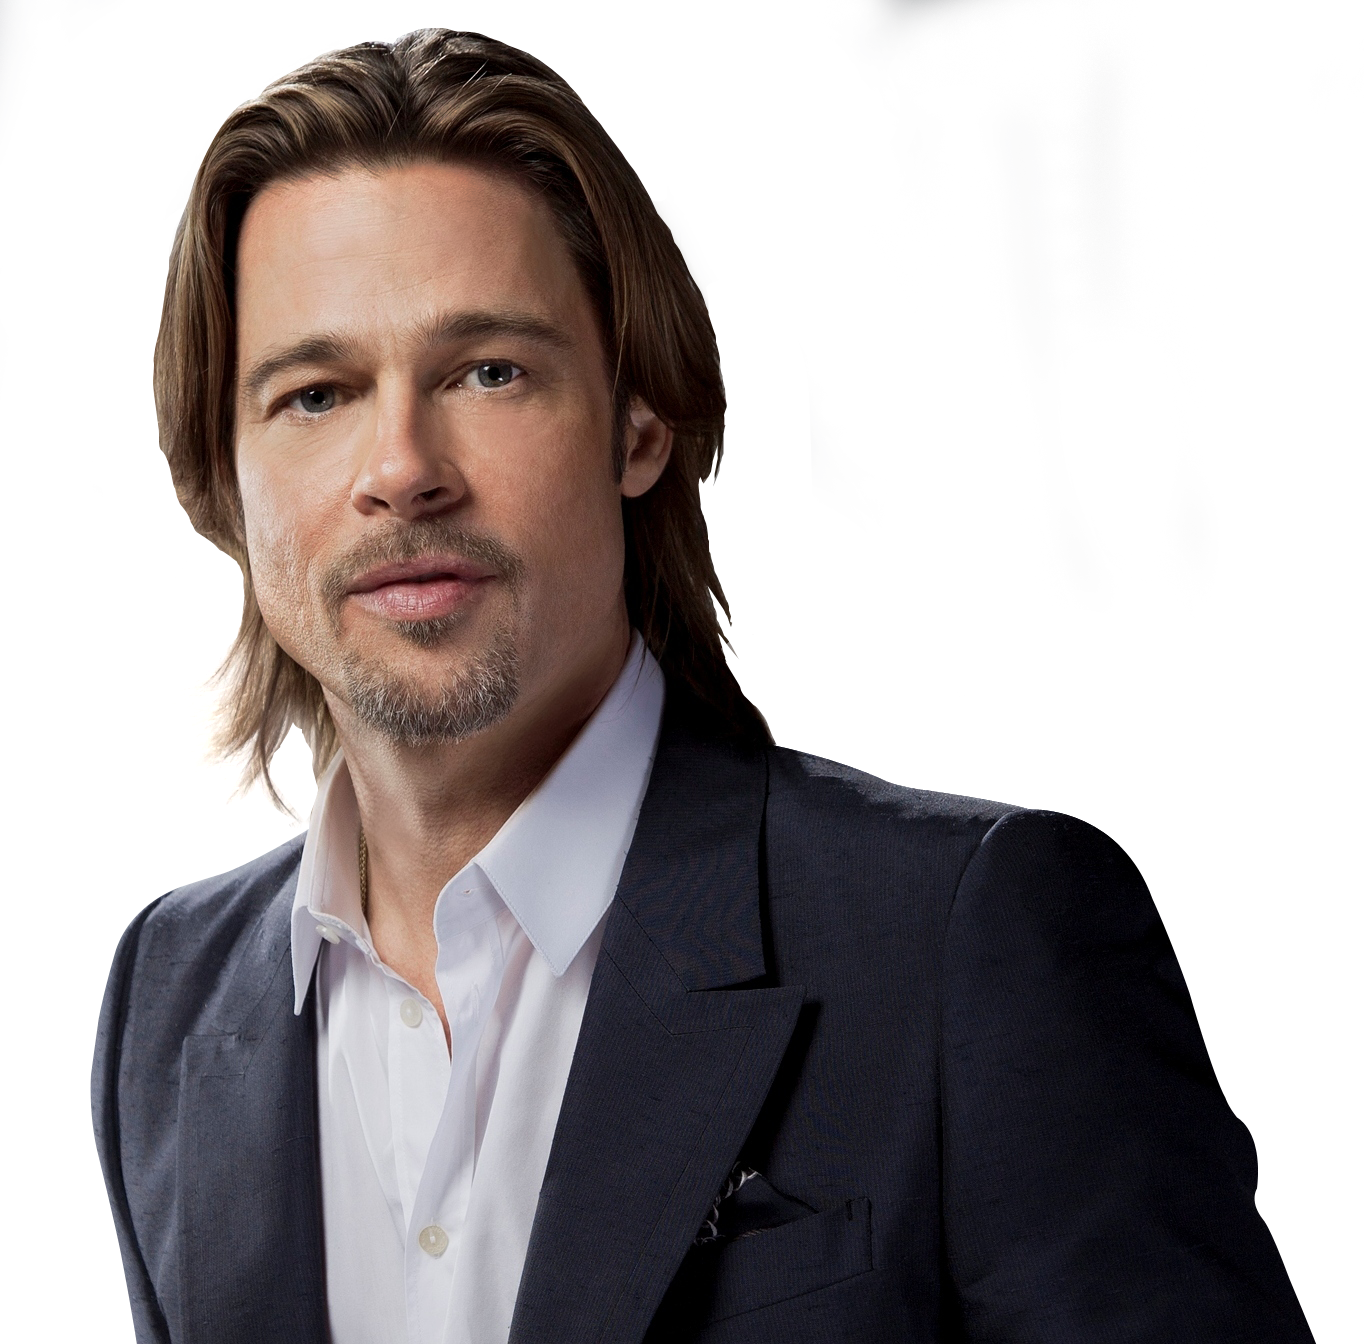 Hairstyle Brad Pitt PNG Transparent Image